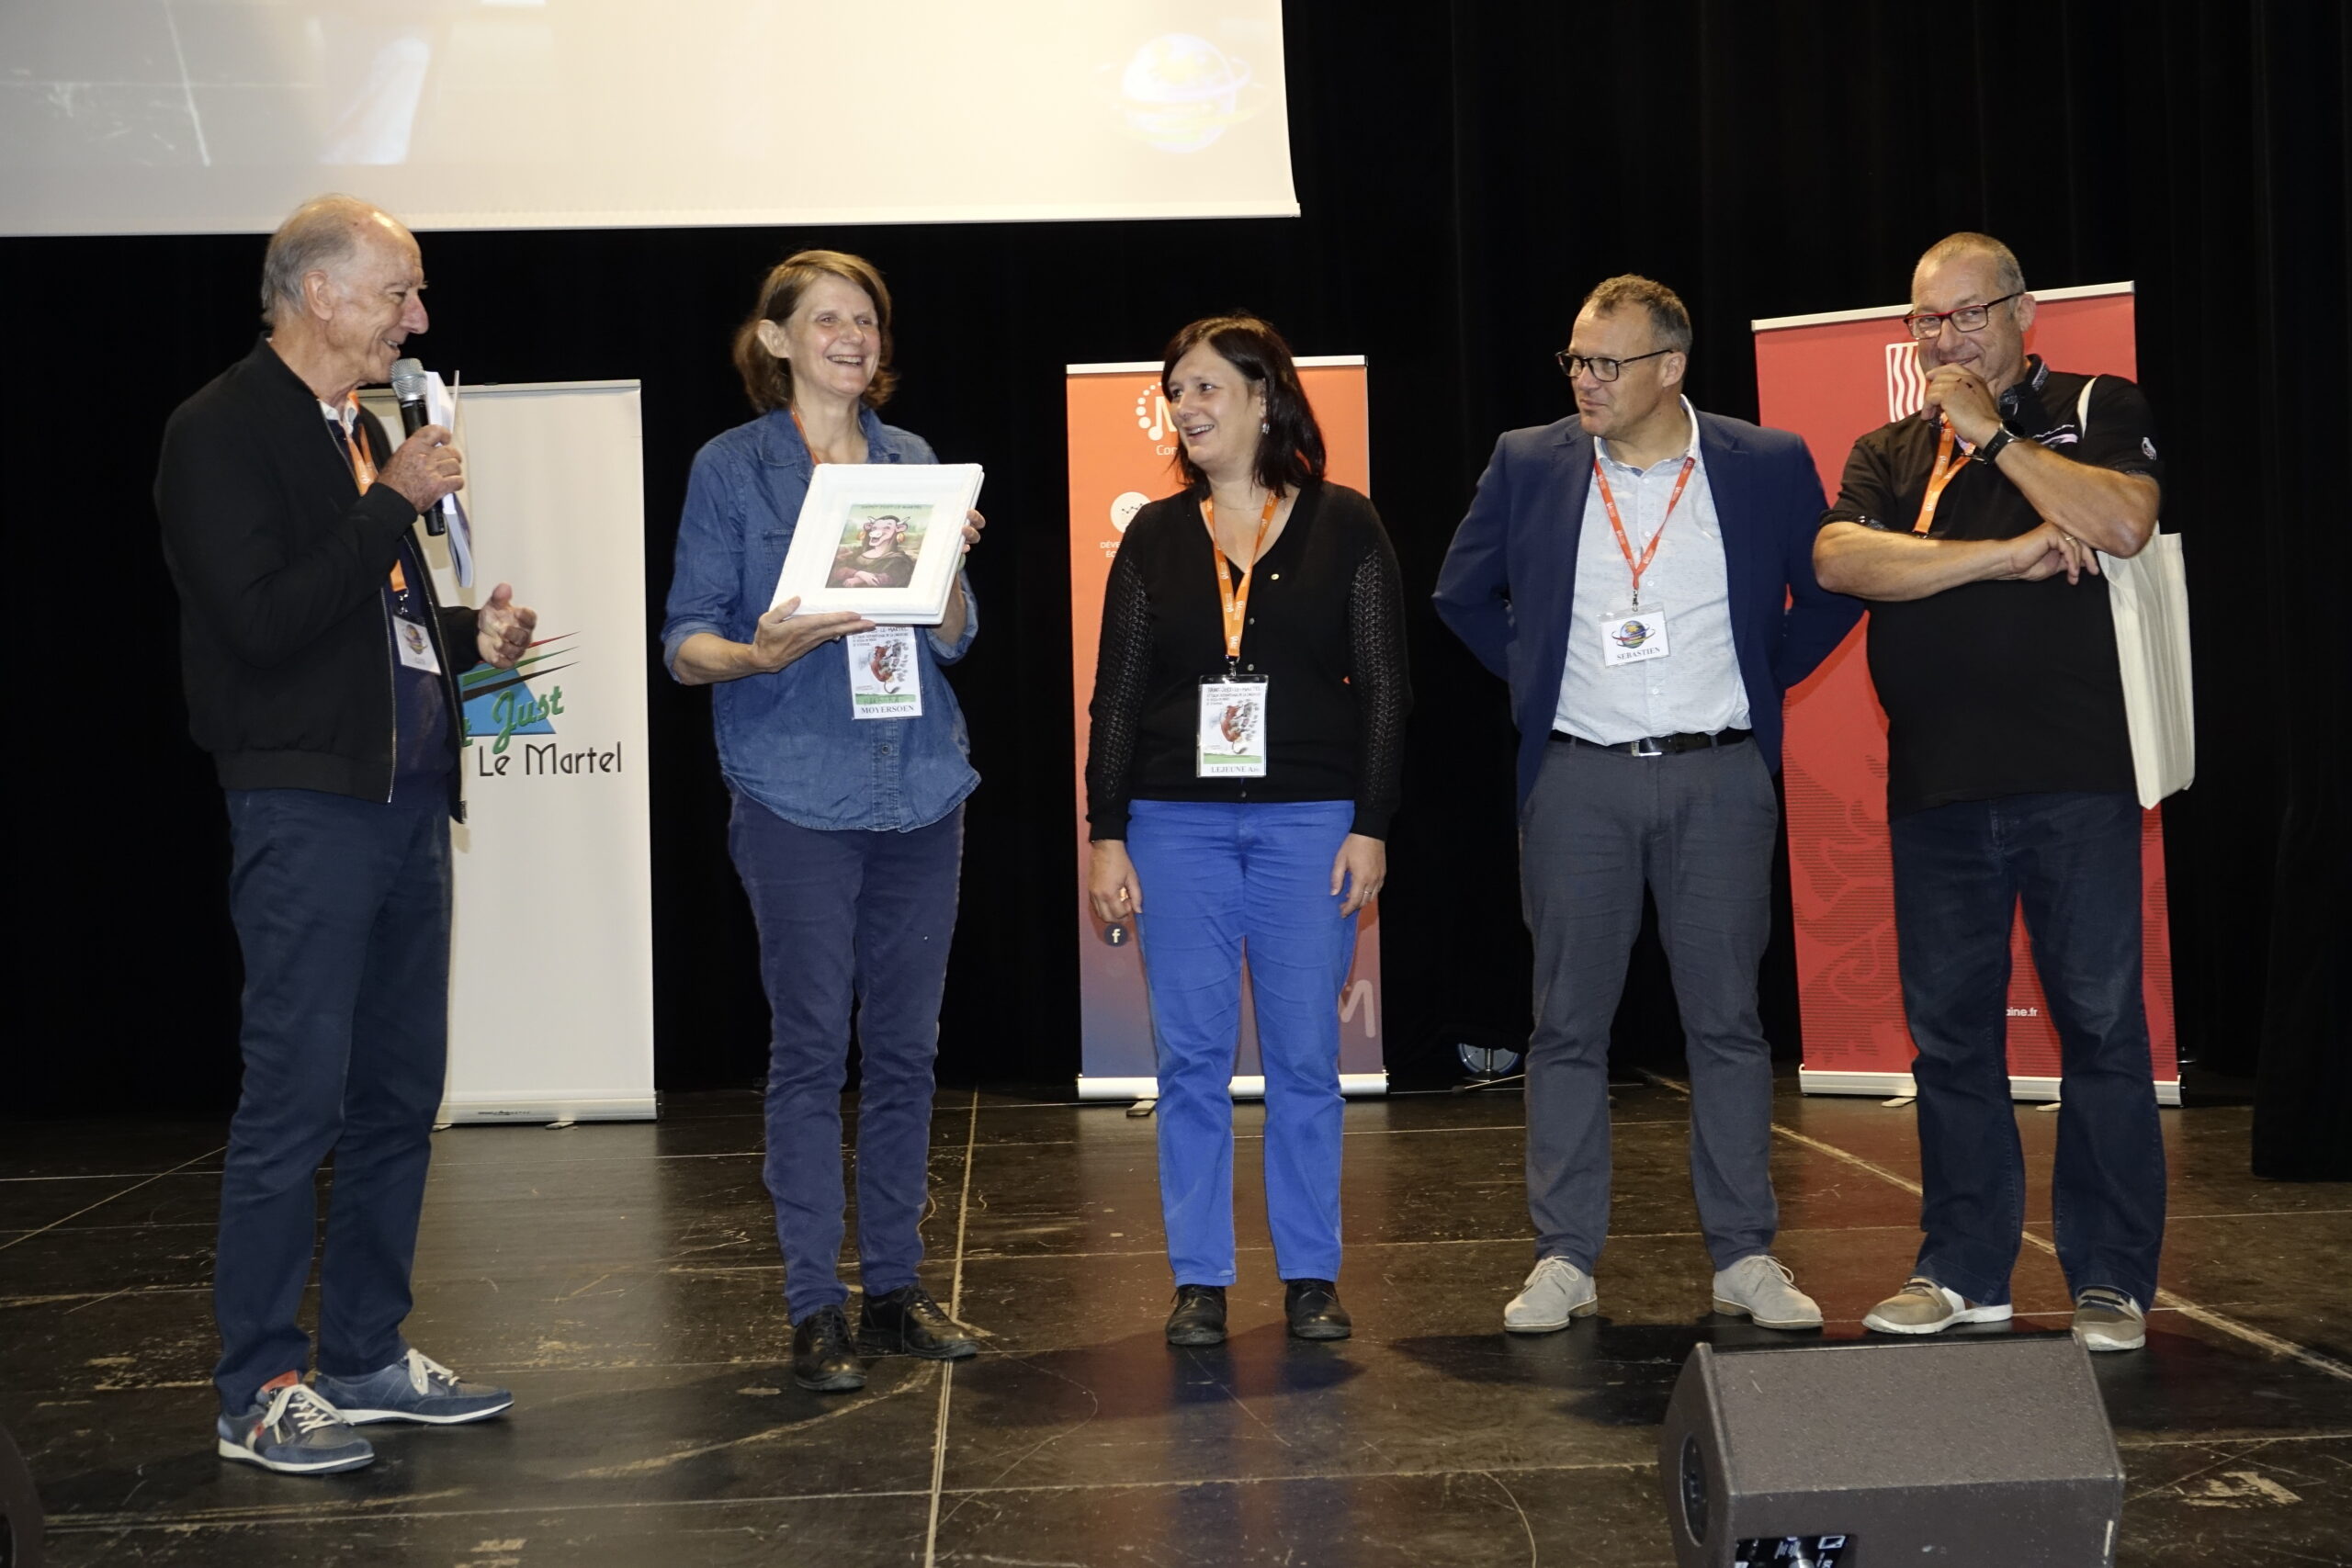 The Cartooning for Peace team receiving the “Crayon de Porcelaine” prize